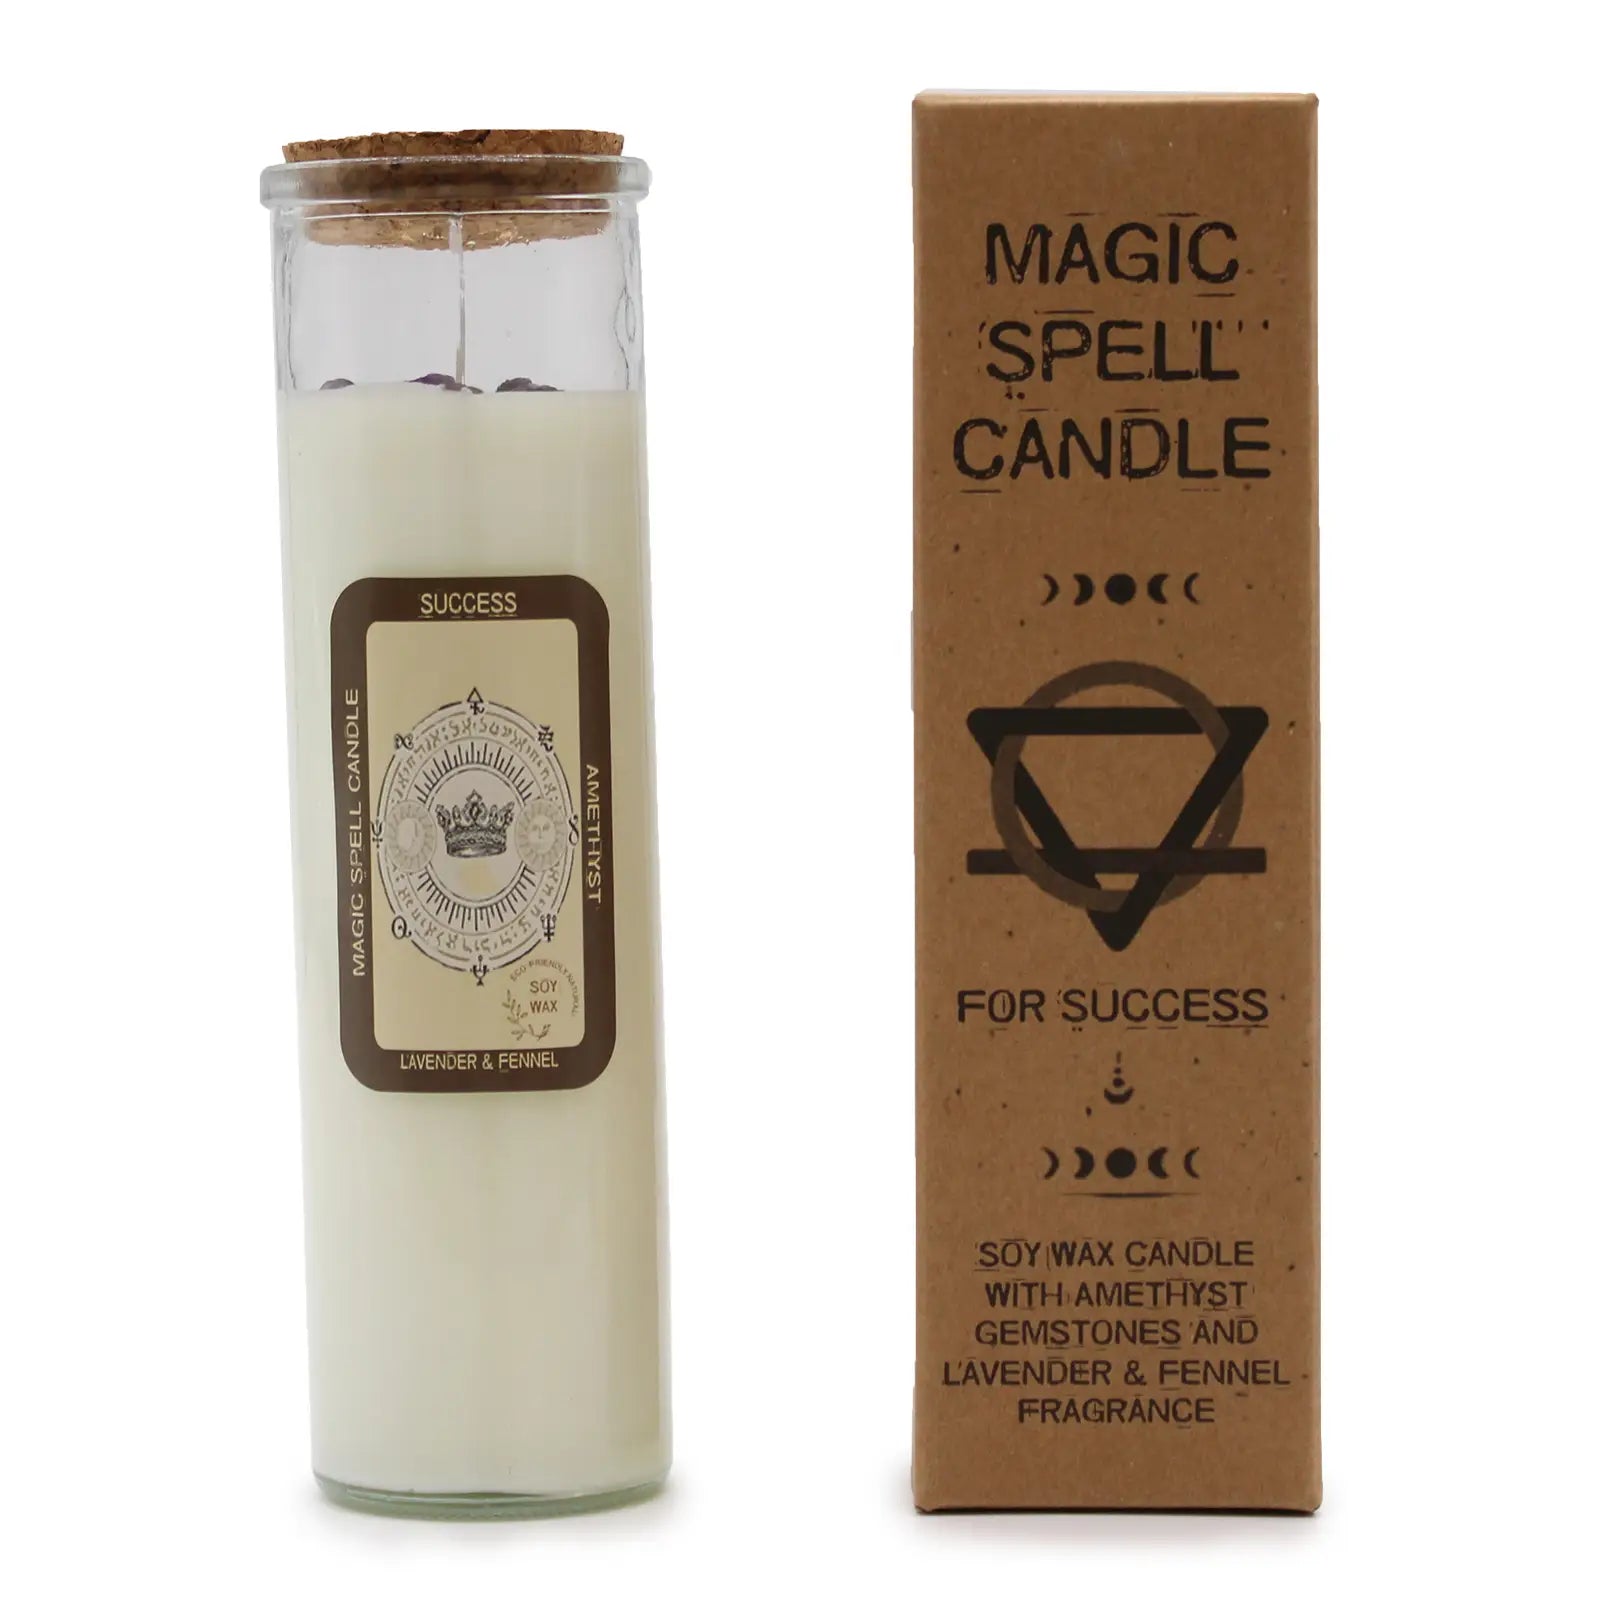 Magic Spell Candle - Success ancient wisdom faire